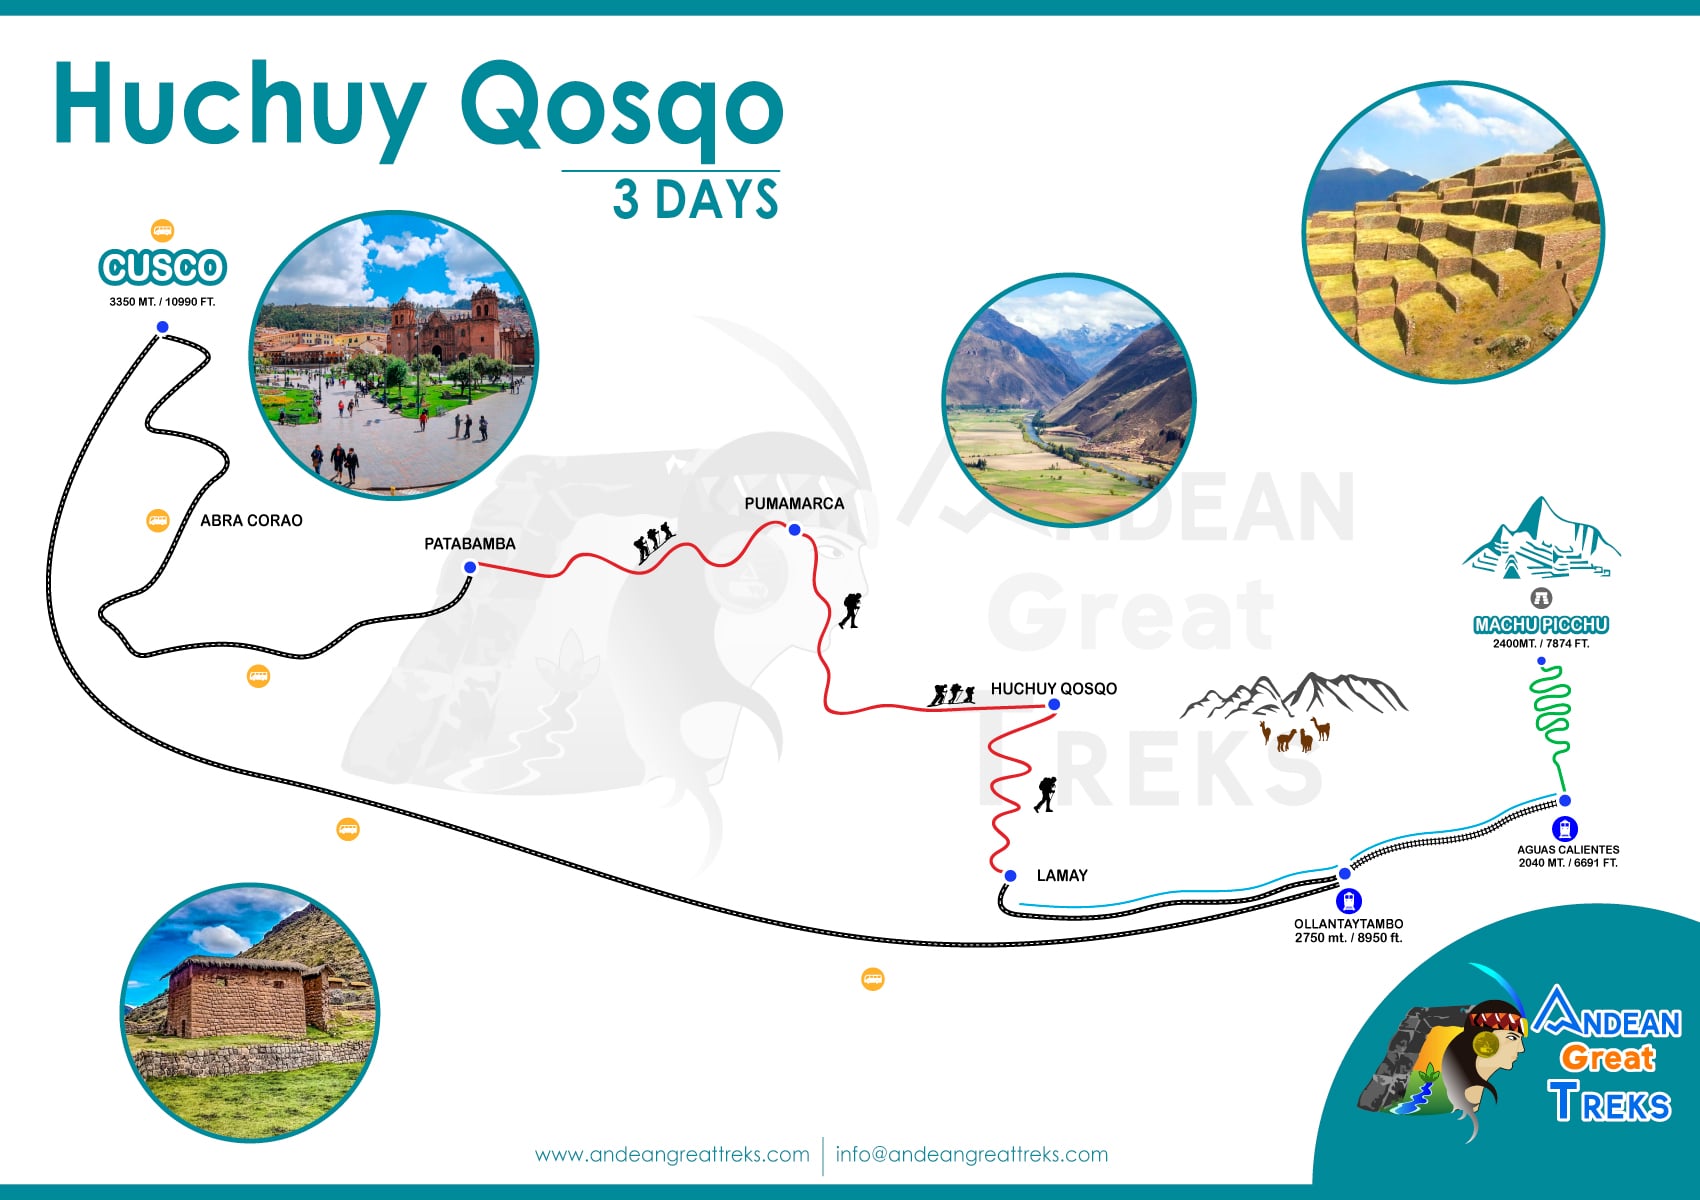 huchuy qosqo trek 3 days by andean great treks